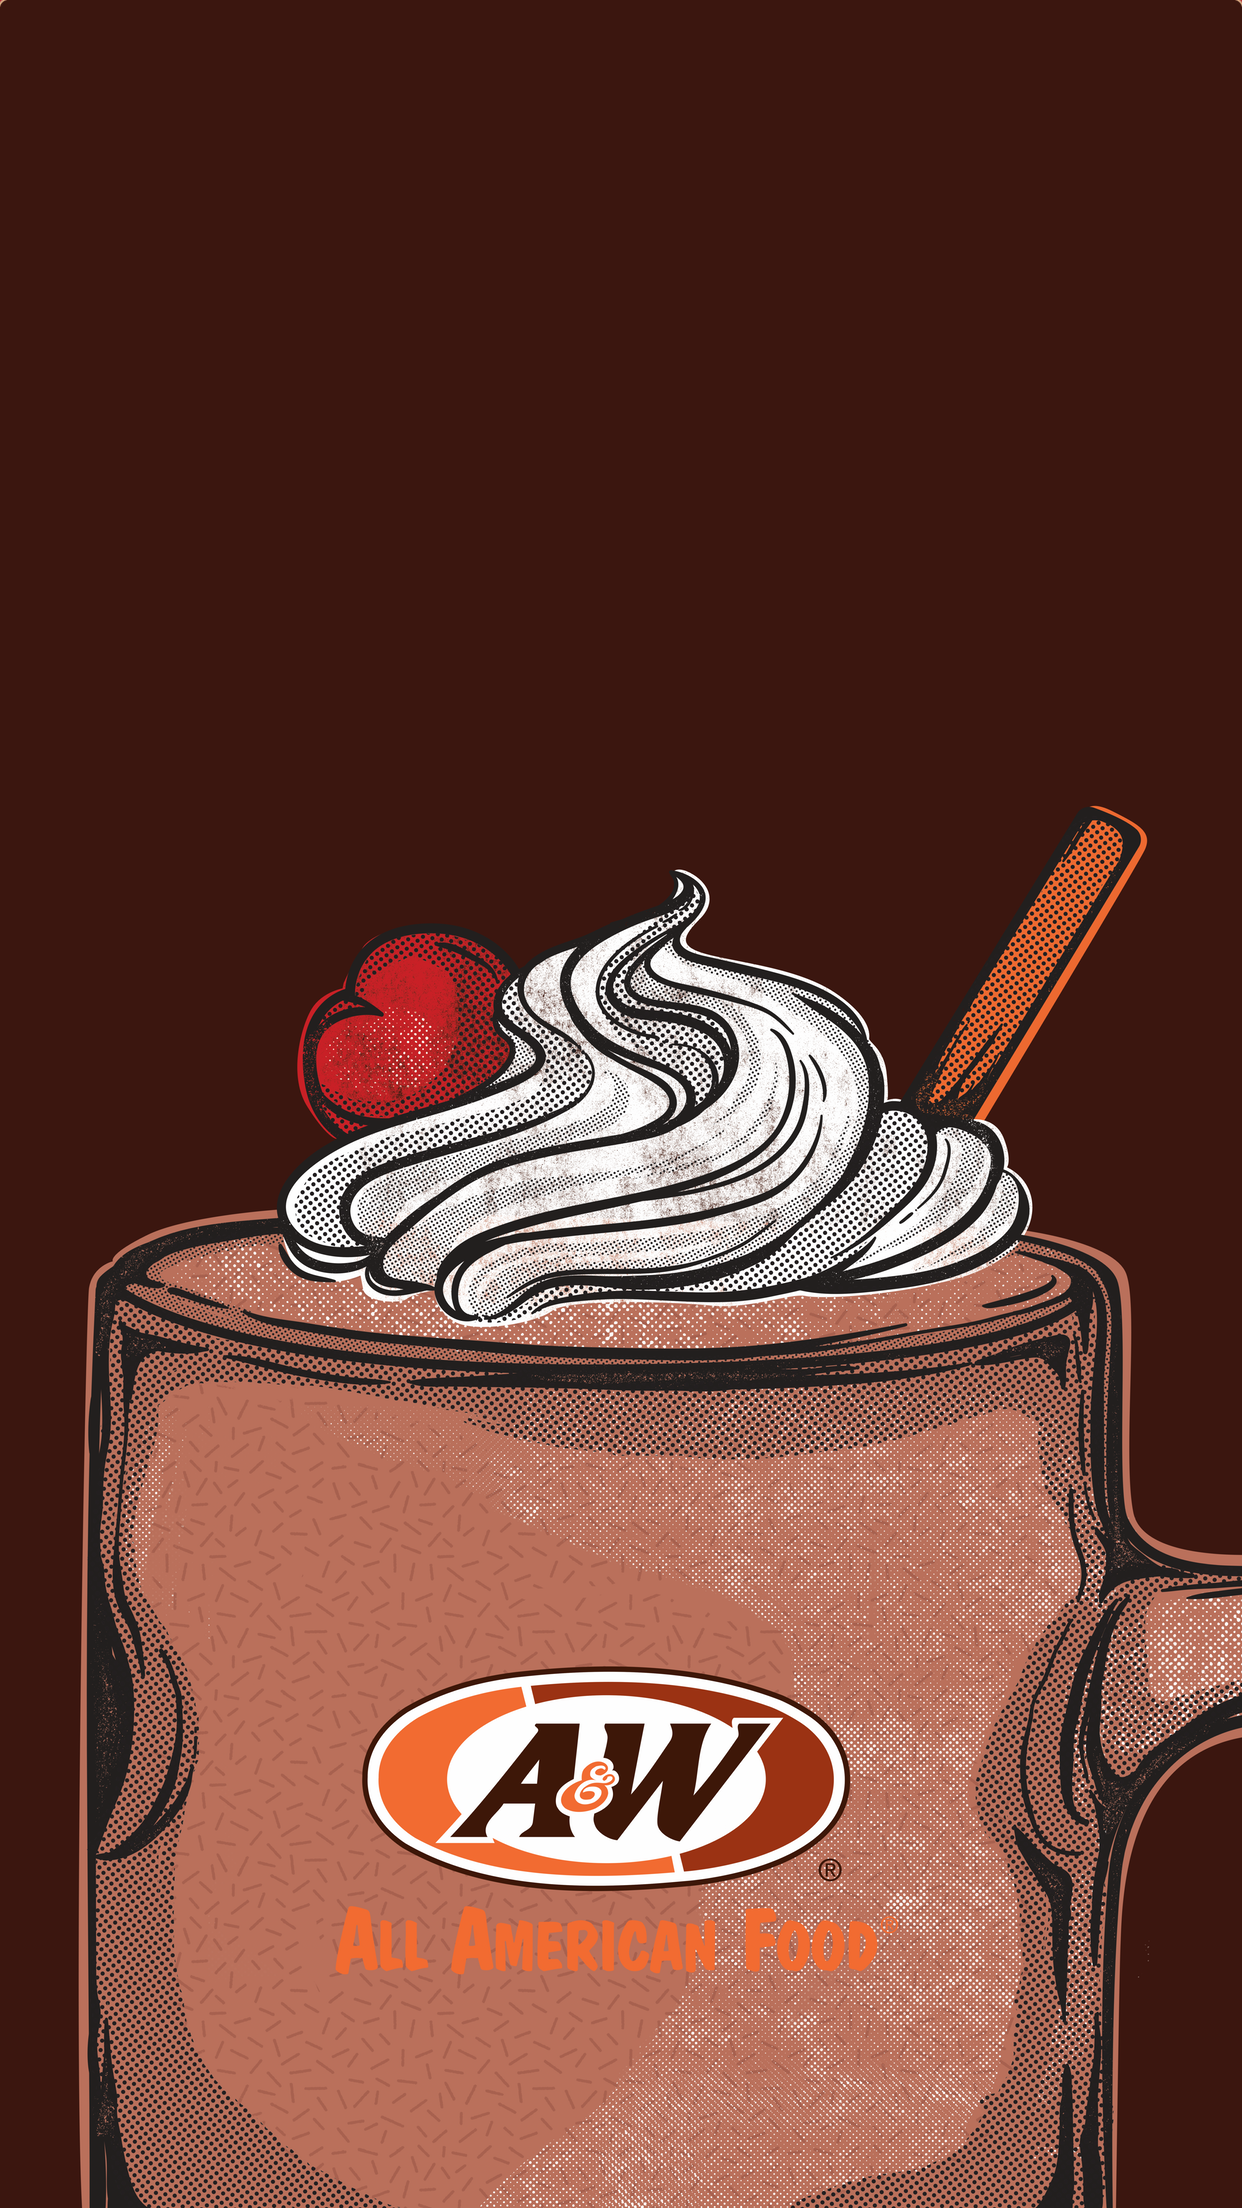 Chocolate shake on brown background